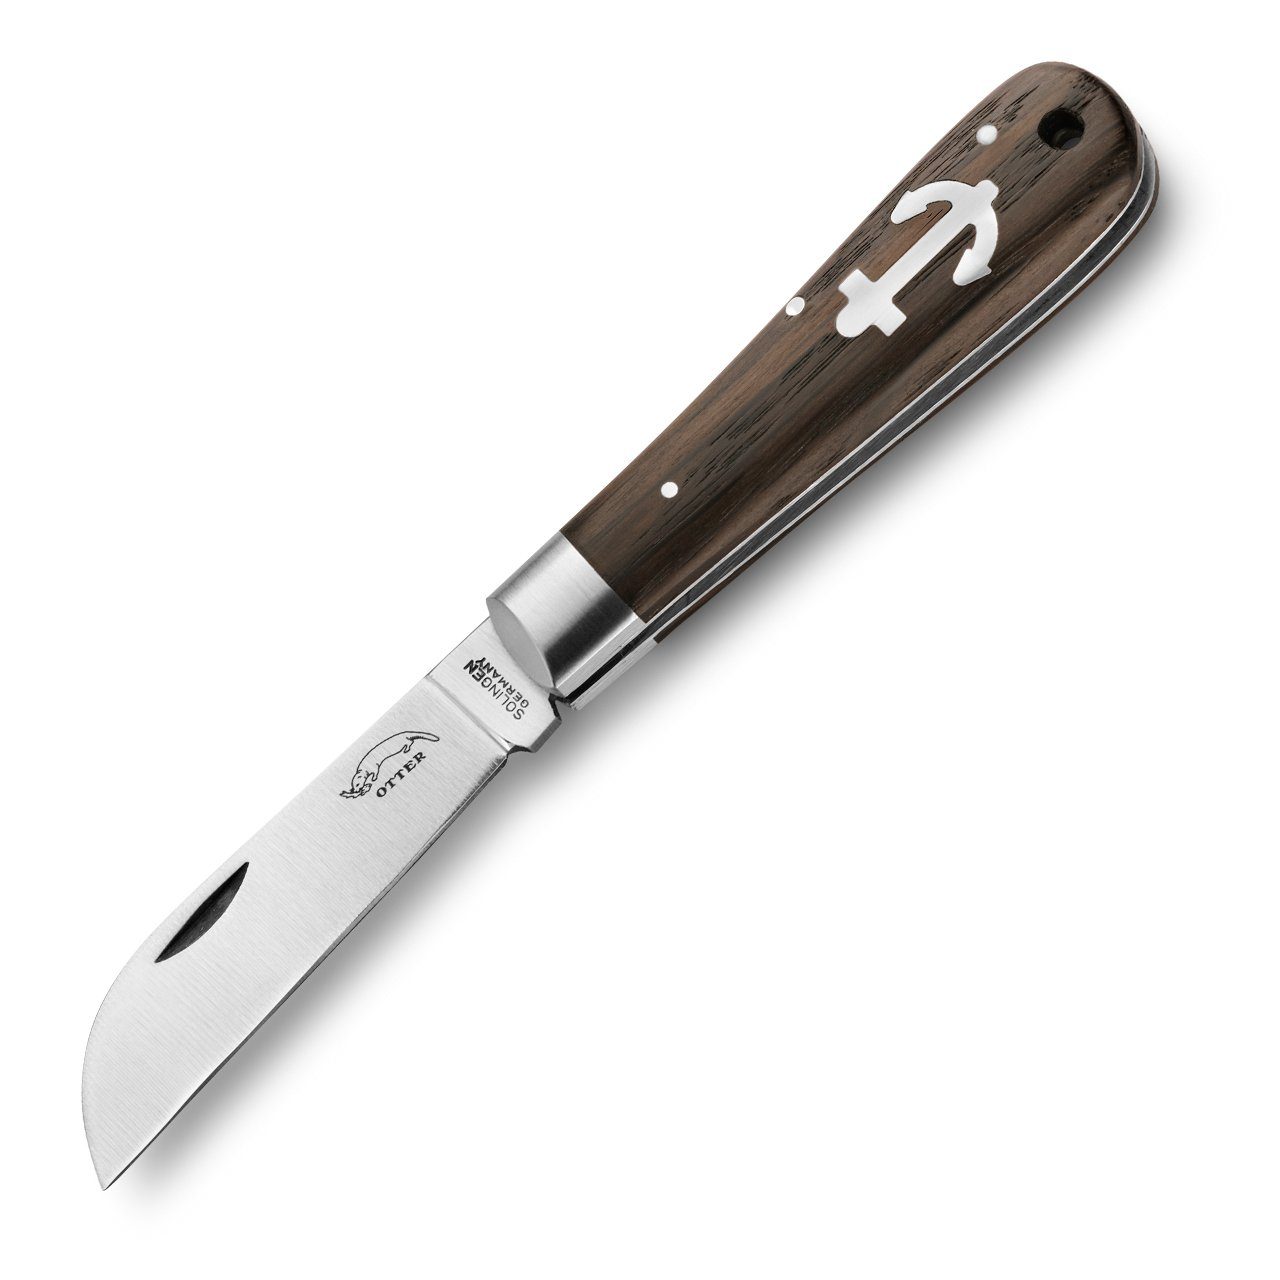 Räuchereiche Messer Anker-Messer Slipjoint Taschenmesser groß Carbonstahlklinge, Otter